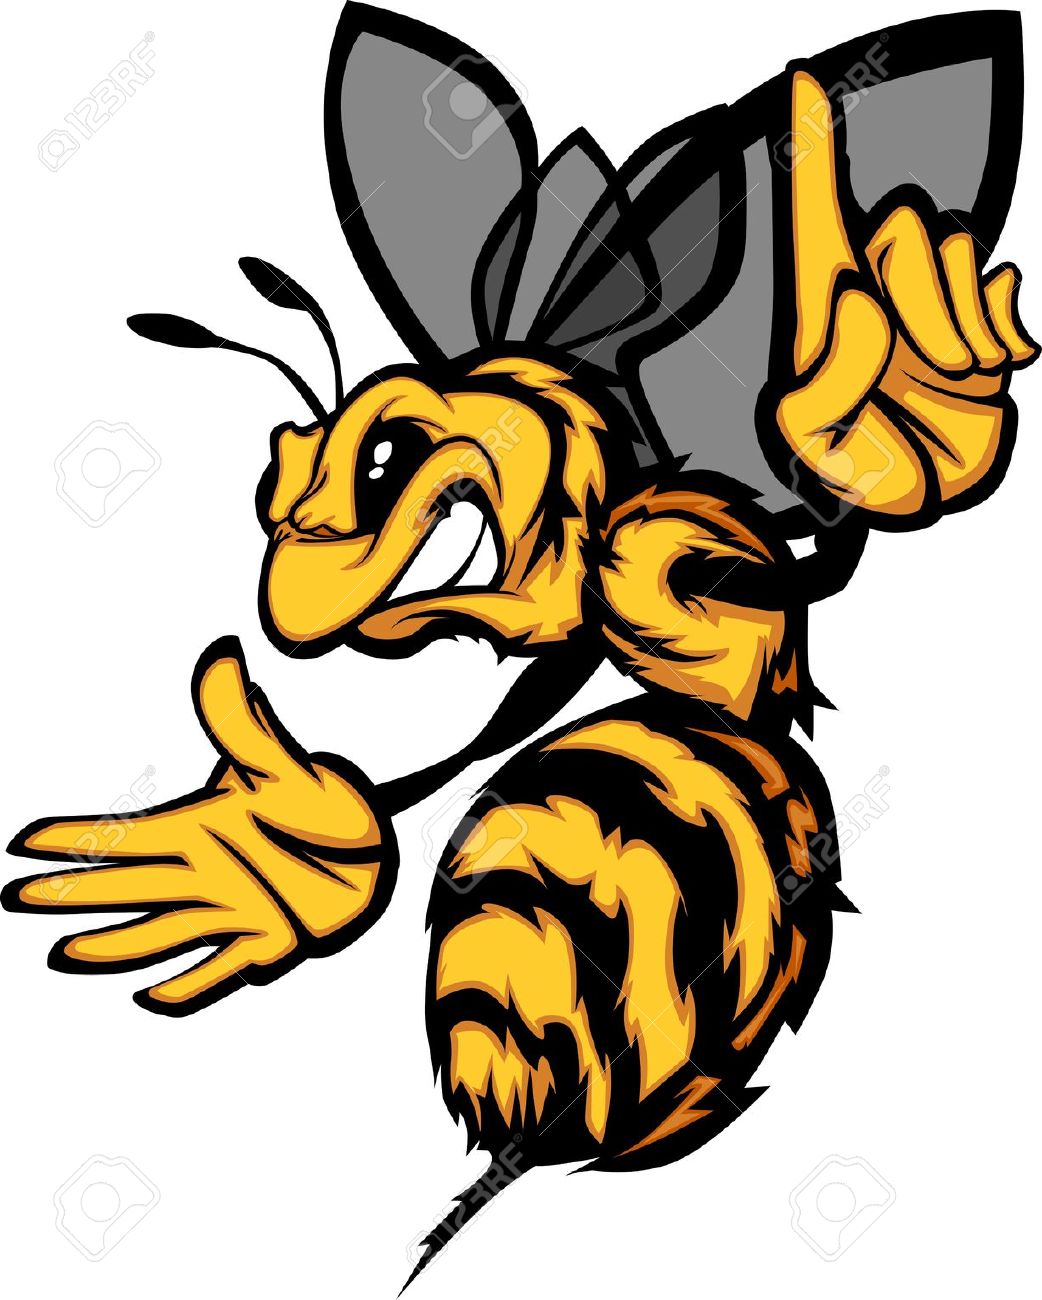 Hornet Bee Wasp Cartoon Image Royalty Free Cliparts, Vectors, And.